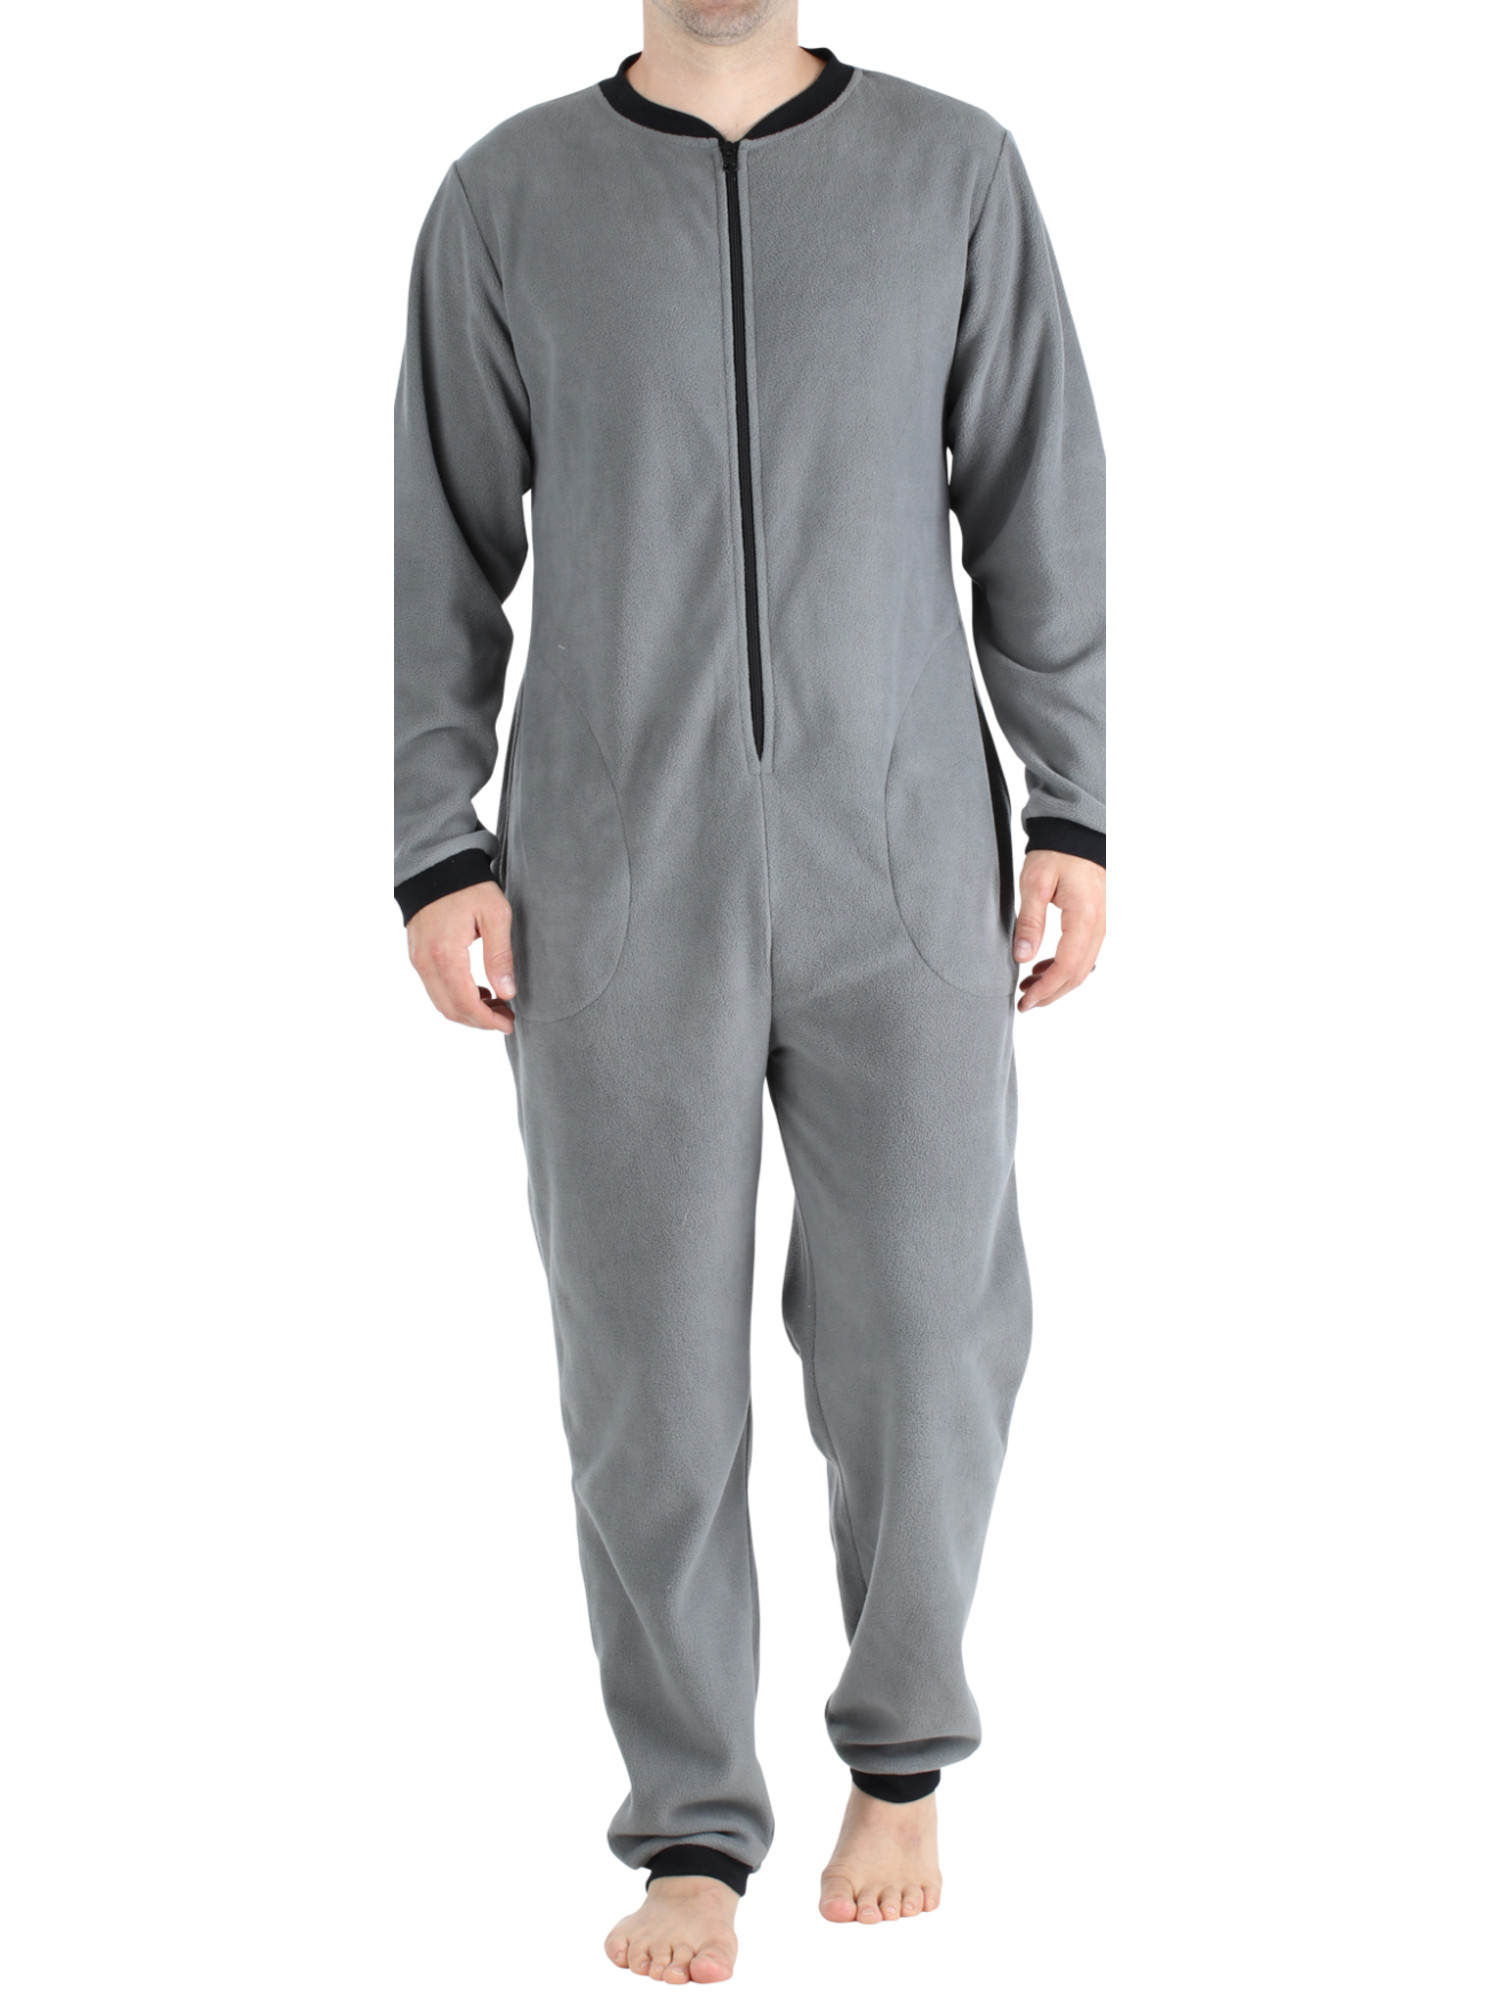 Sleepyheads Men’s Fleece Non-Footed Solid Color Onesie Pajamas Jumpsuit 